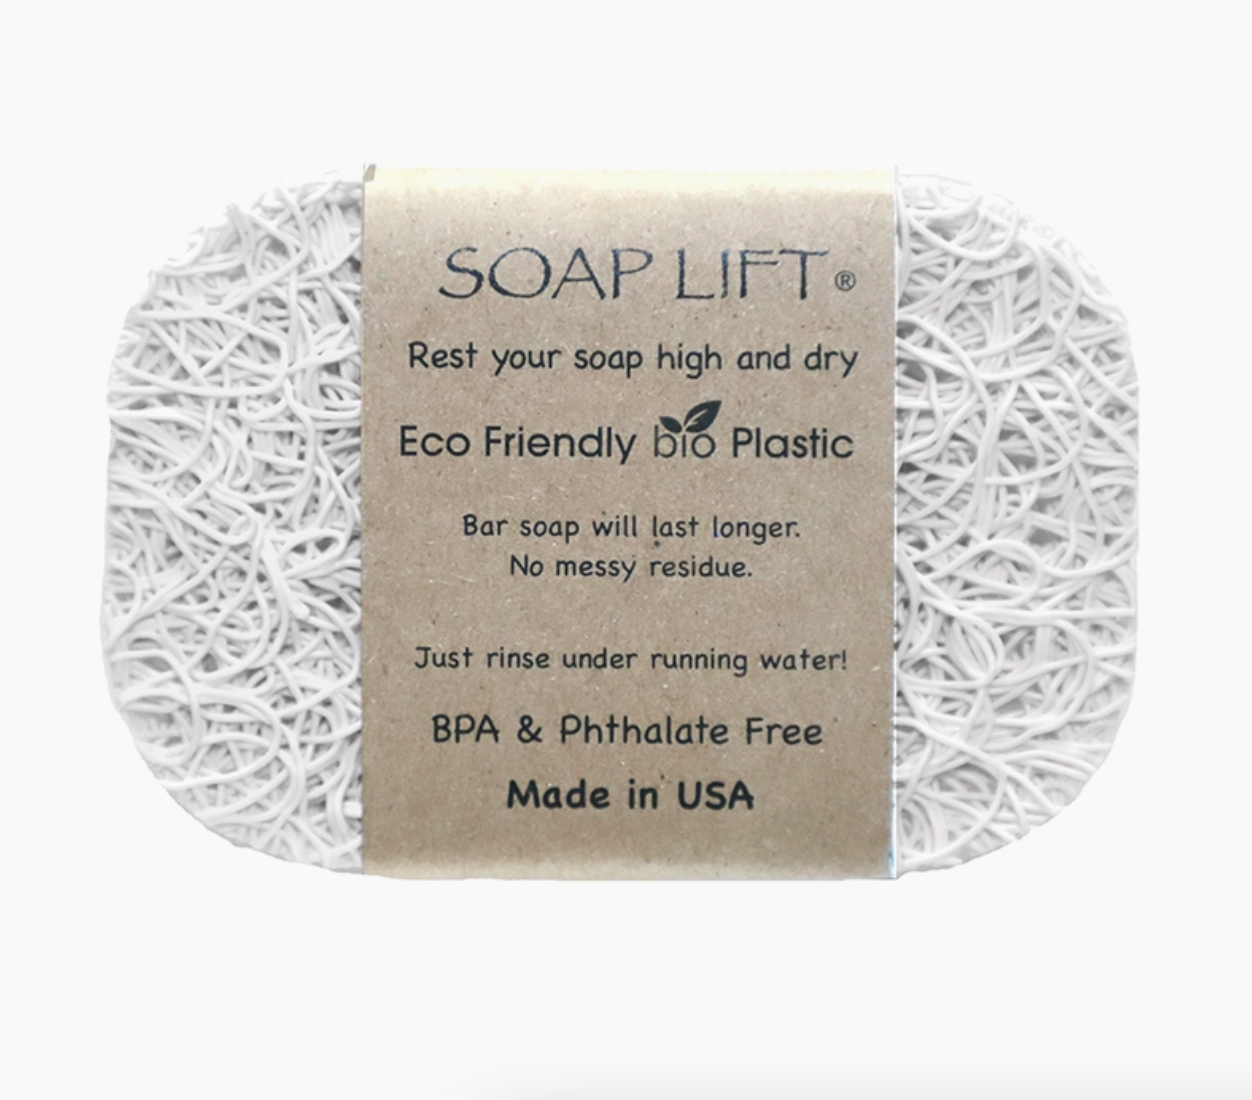 Soap Lifts